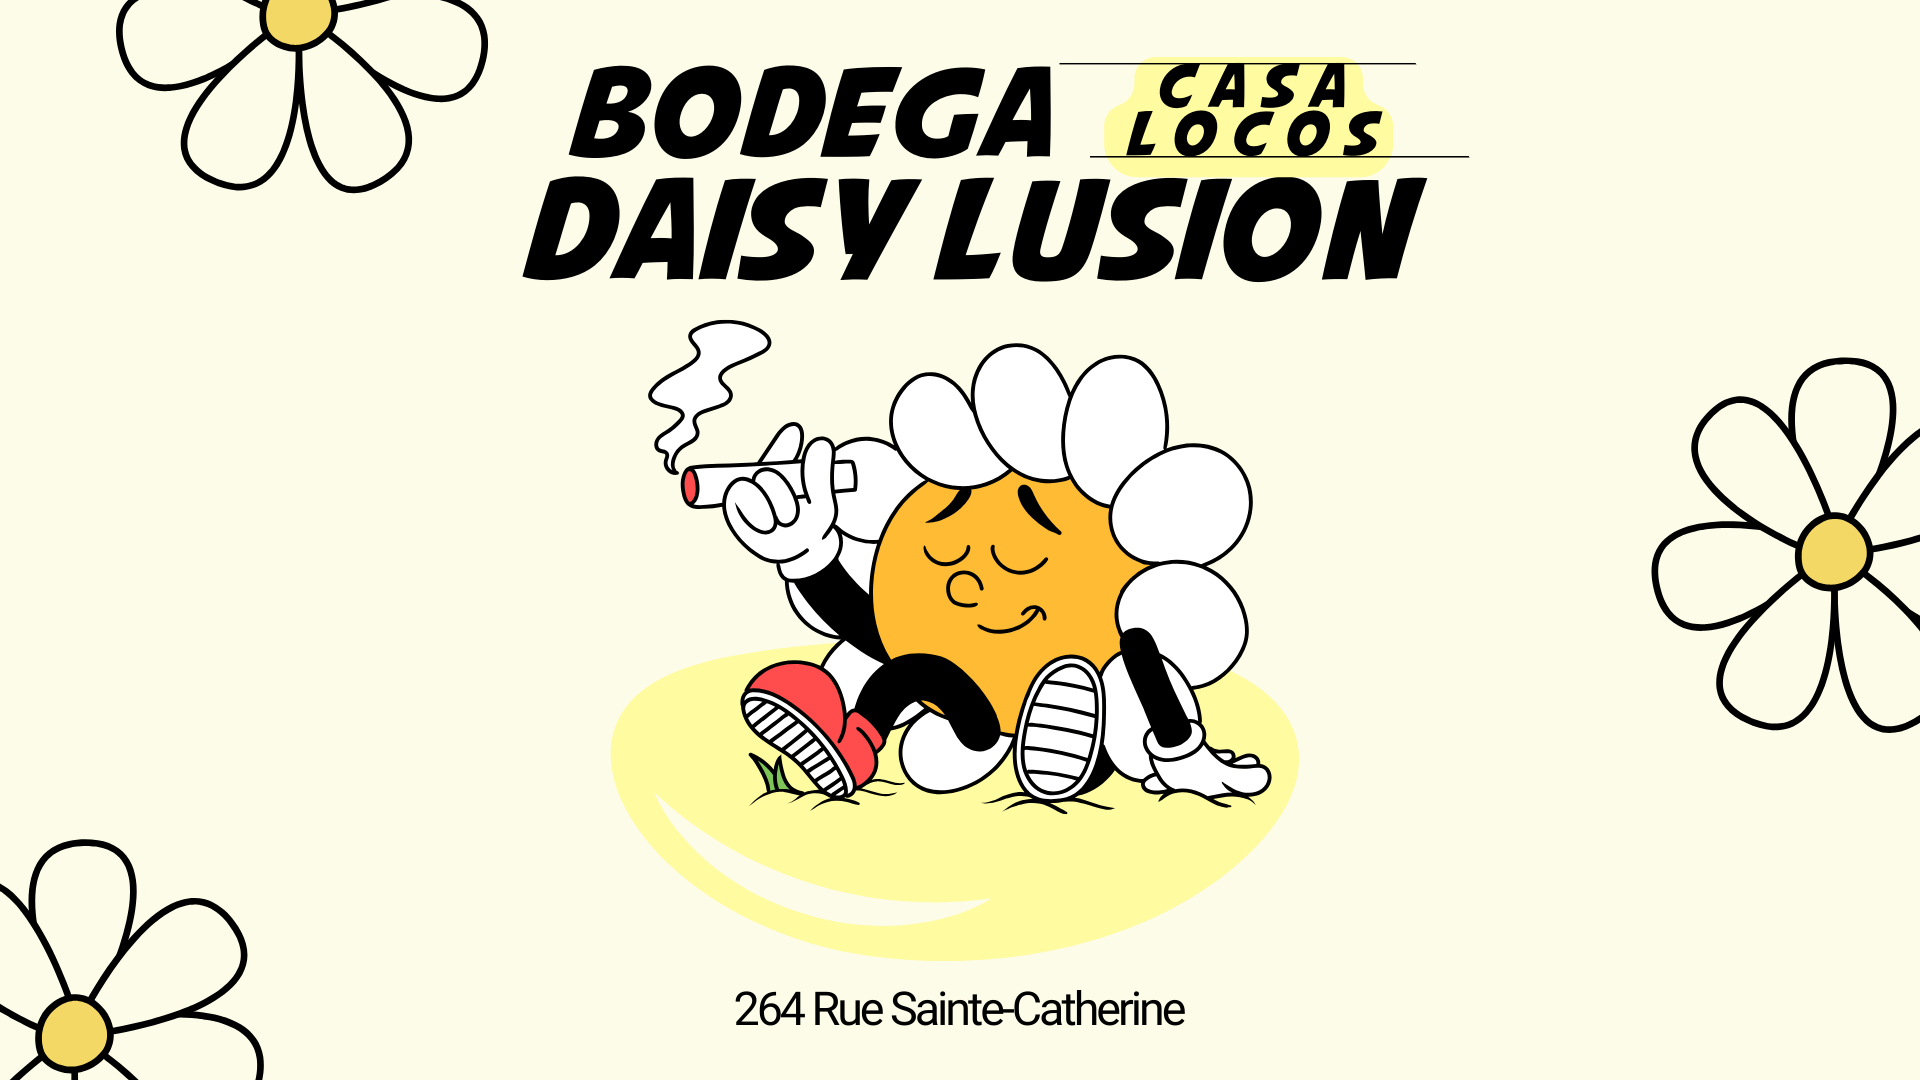 Daisy Lusion x Bodega Casa Locos: AMER all night long at TBA